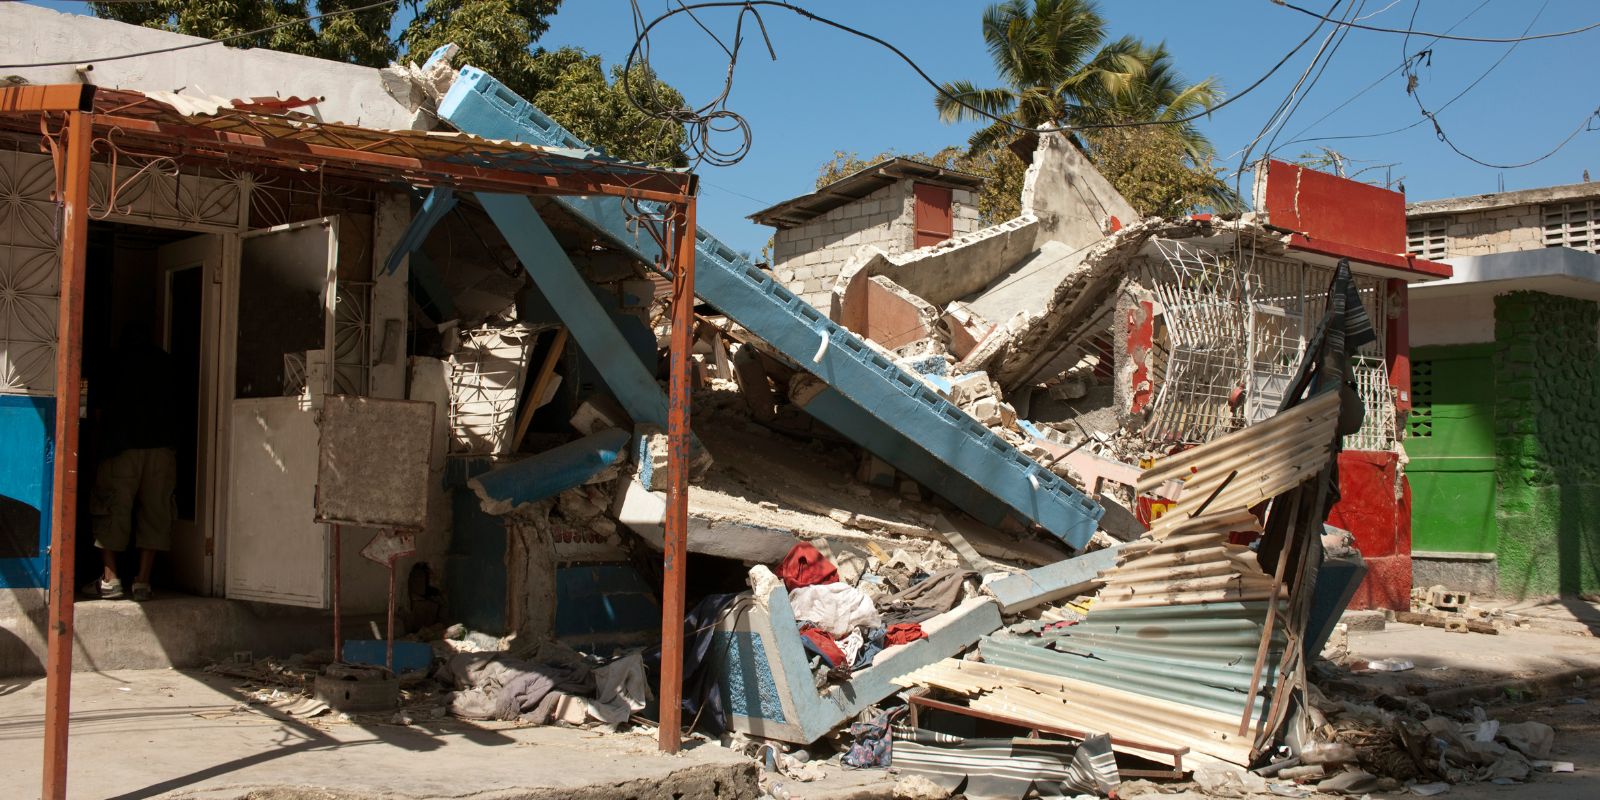 January 12th: Haiti Earthquake Claimed 316,000 Lives